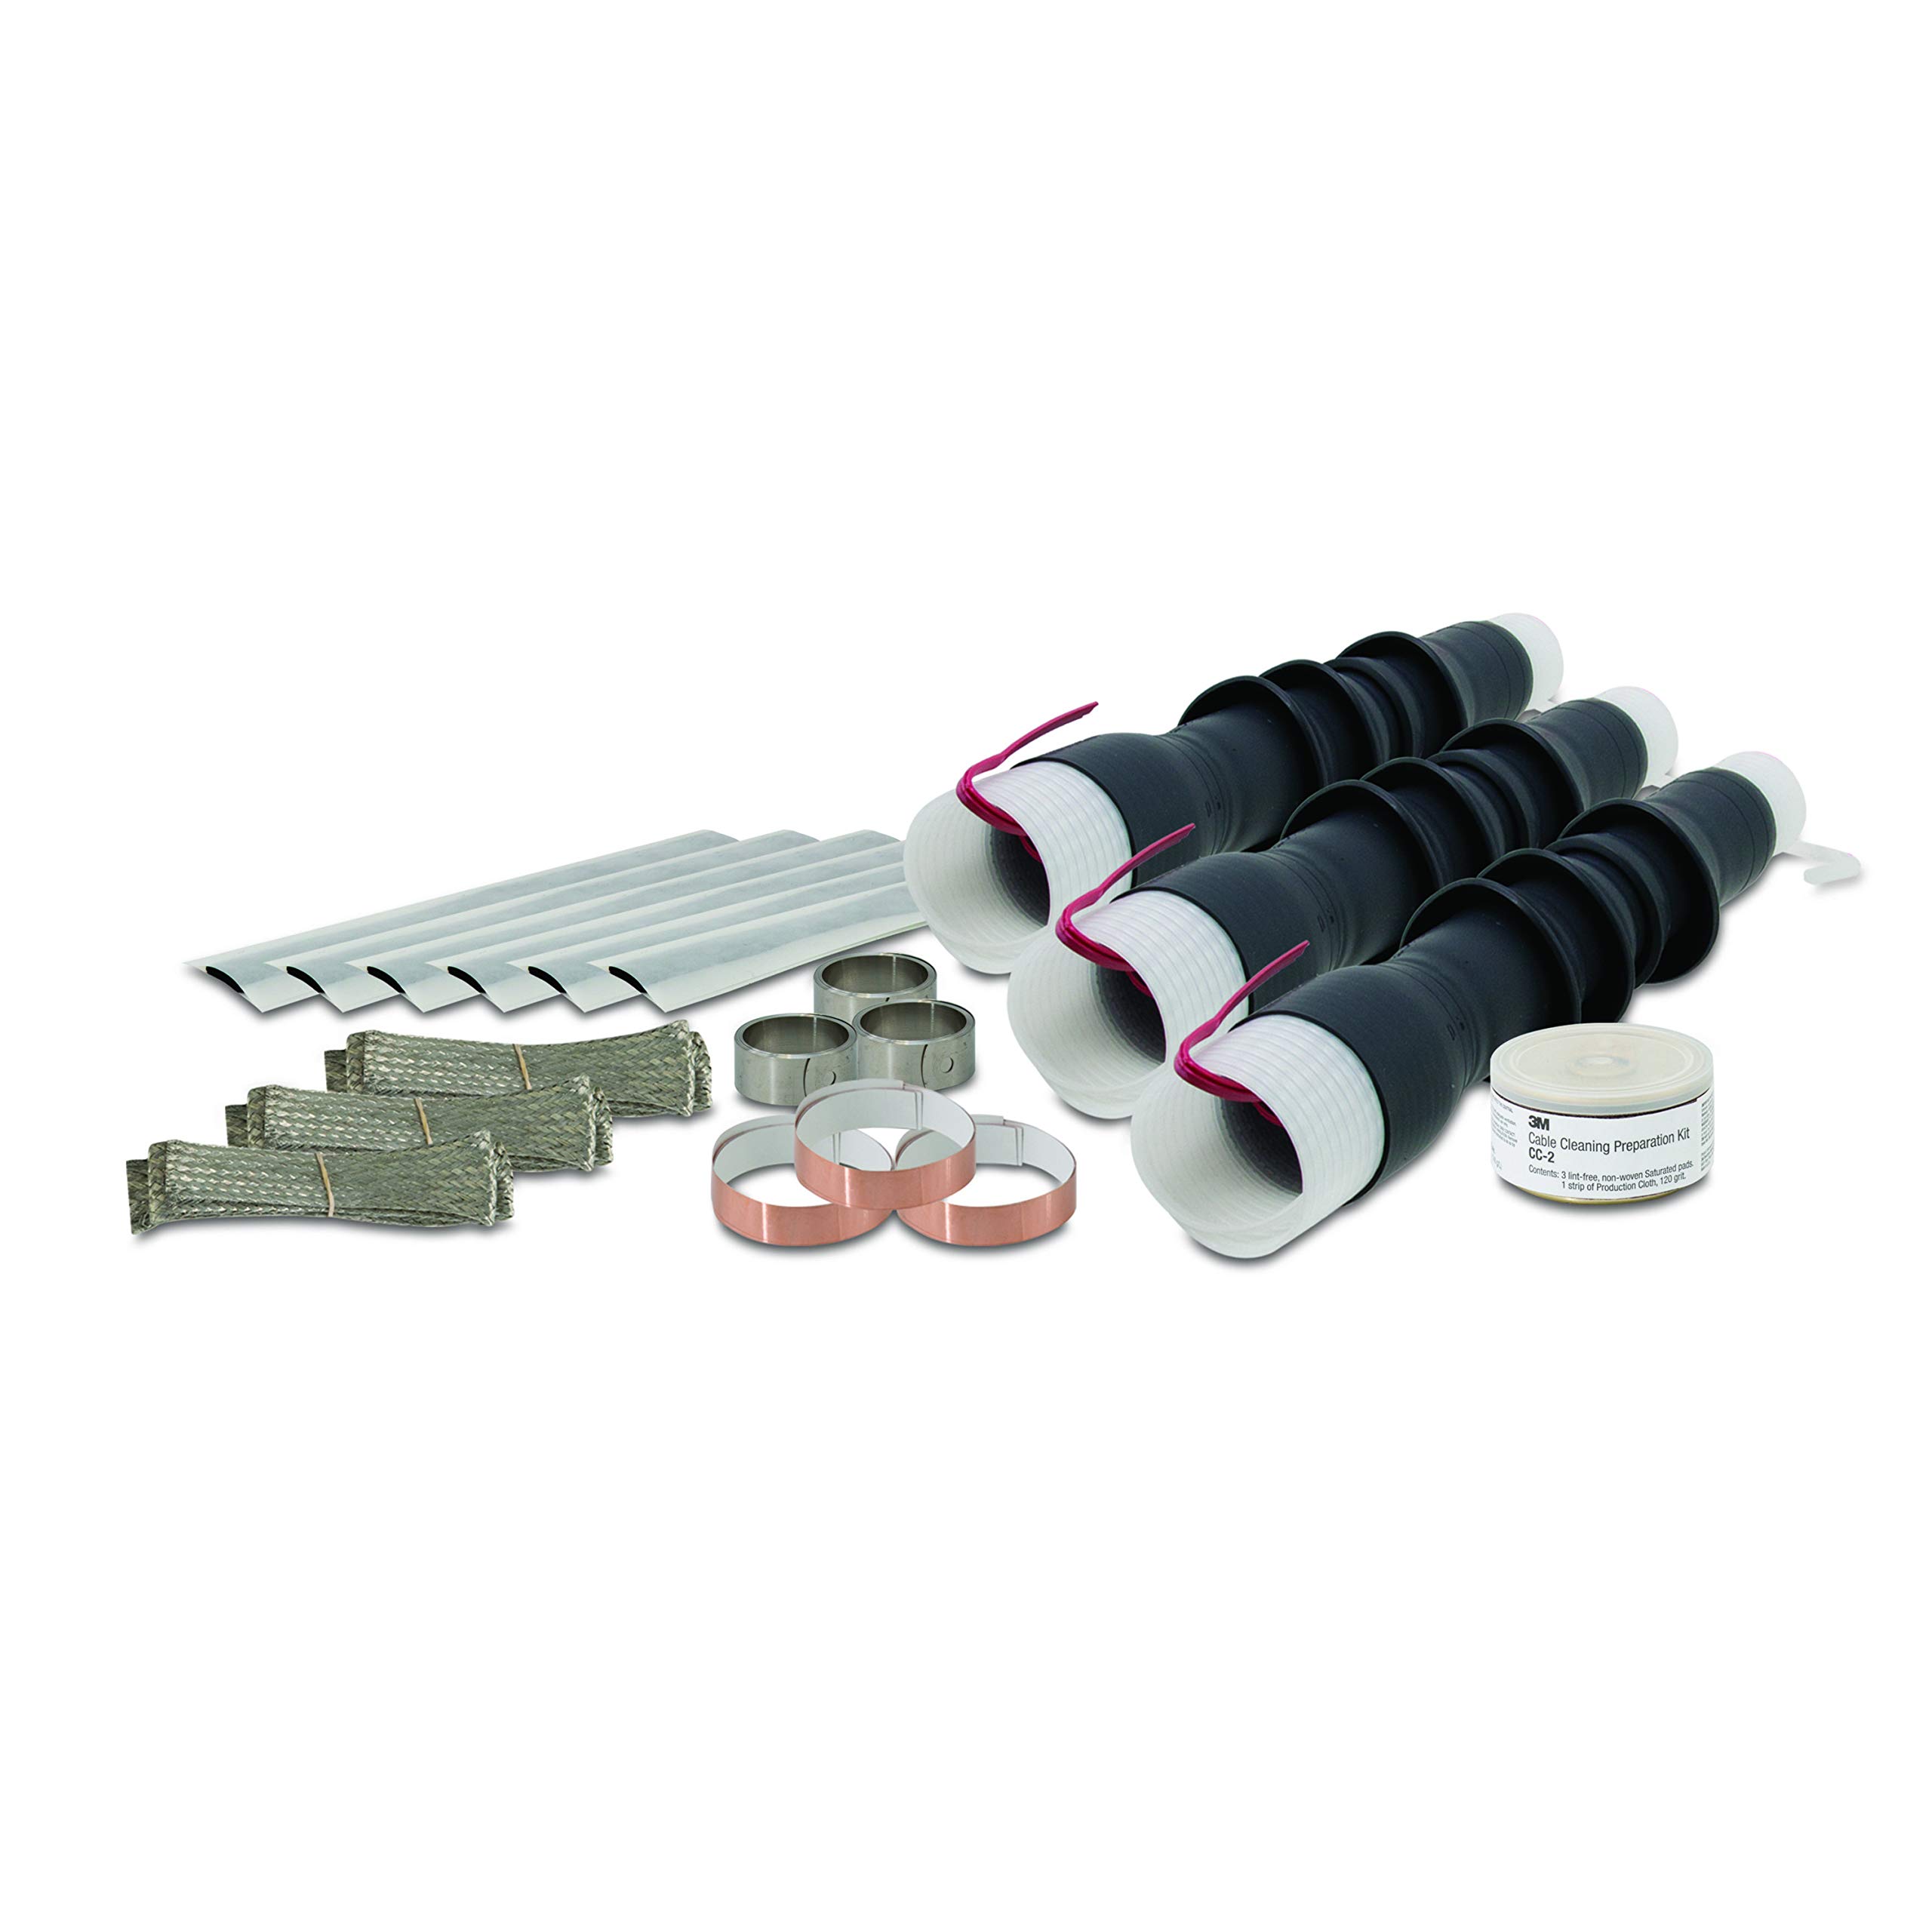 Cold Shrink QT-III 3/C Termination Kit 7621-T-110-3G, Tape/Wire/UniShield®, 5-15 kV, Insulation OD 0.50-0.70 in, 3/kit